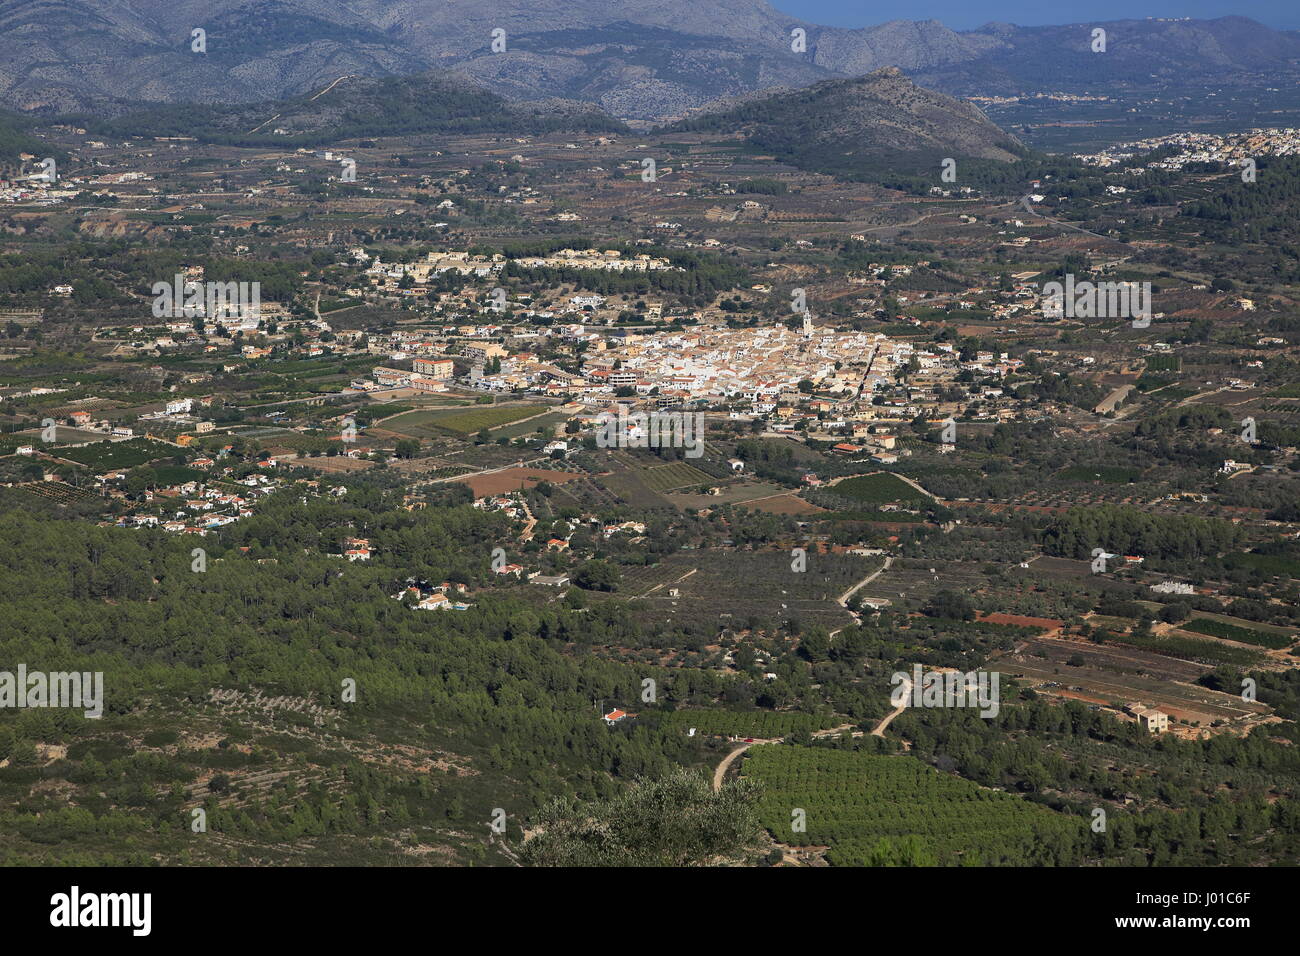 Raised view over Parcent village and Pop Valley, La Marina Alta, Alicante province, Spain Stock Photo